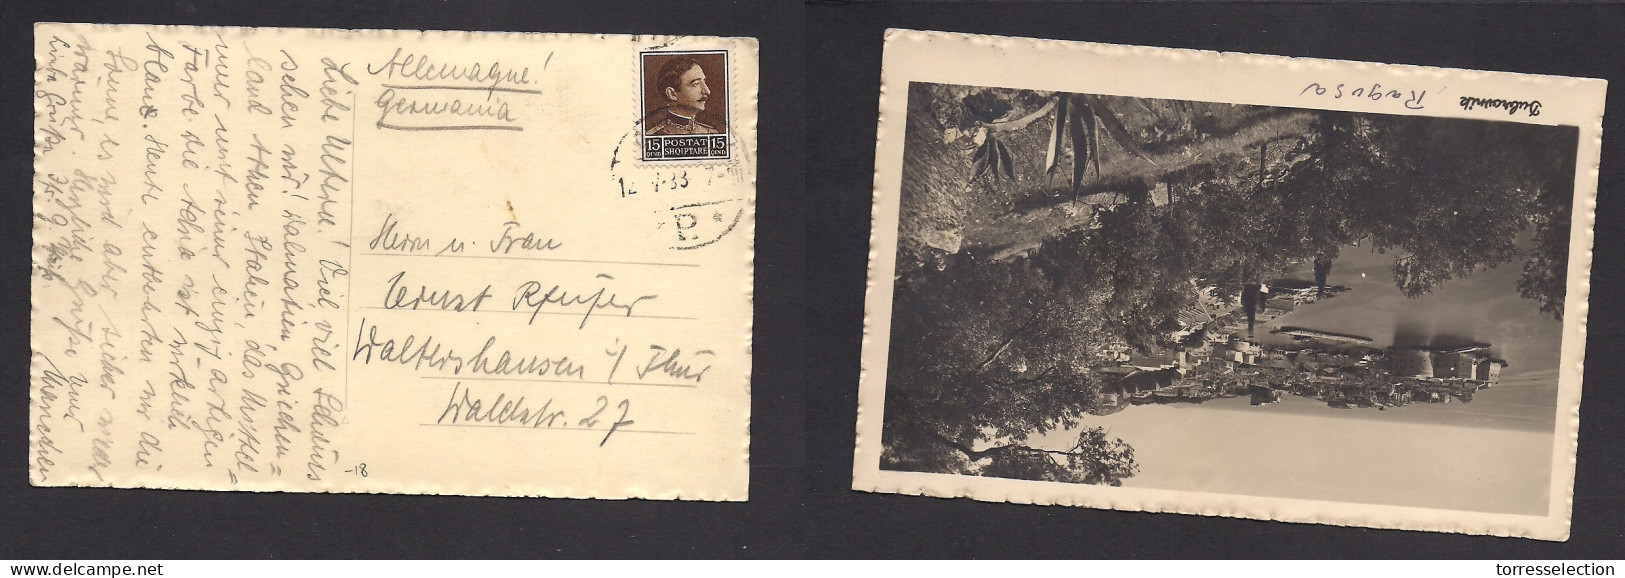 ALBANIA. 1938. Ragusa Ppc, Tirane - Germany, Waltershansen. Fkd Ppc. XSALE. - Albania